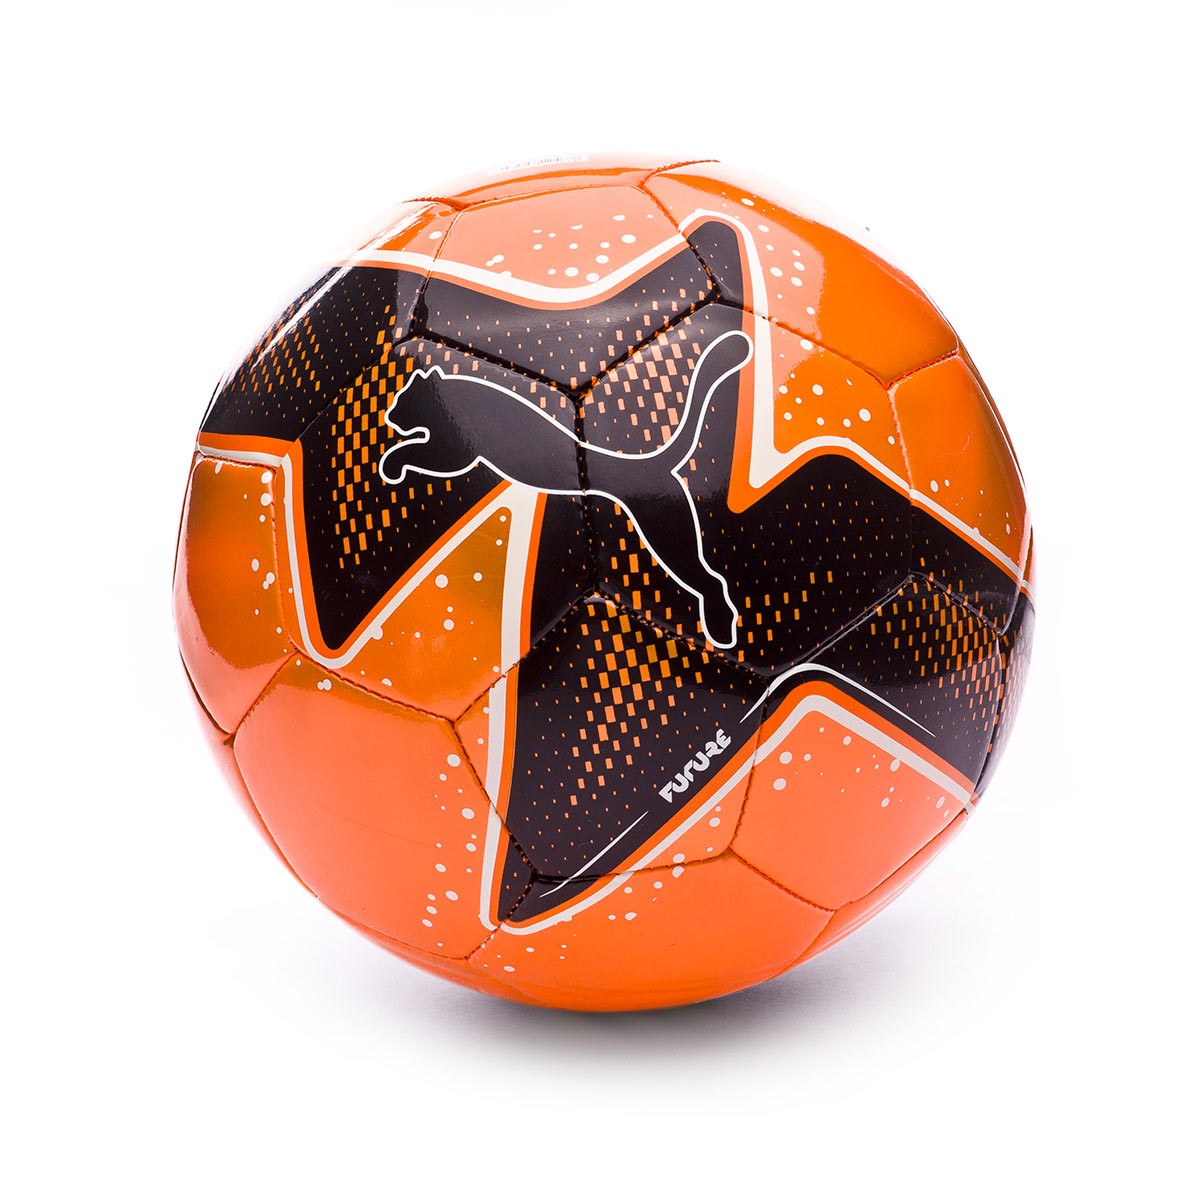 Ball Puma Future Pulse Shocking orange-Puma black-Puma white - Football  store Fútbol Emotion